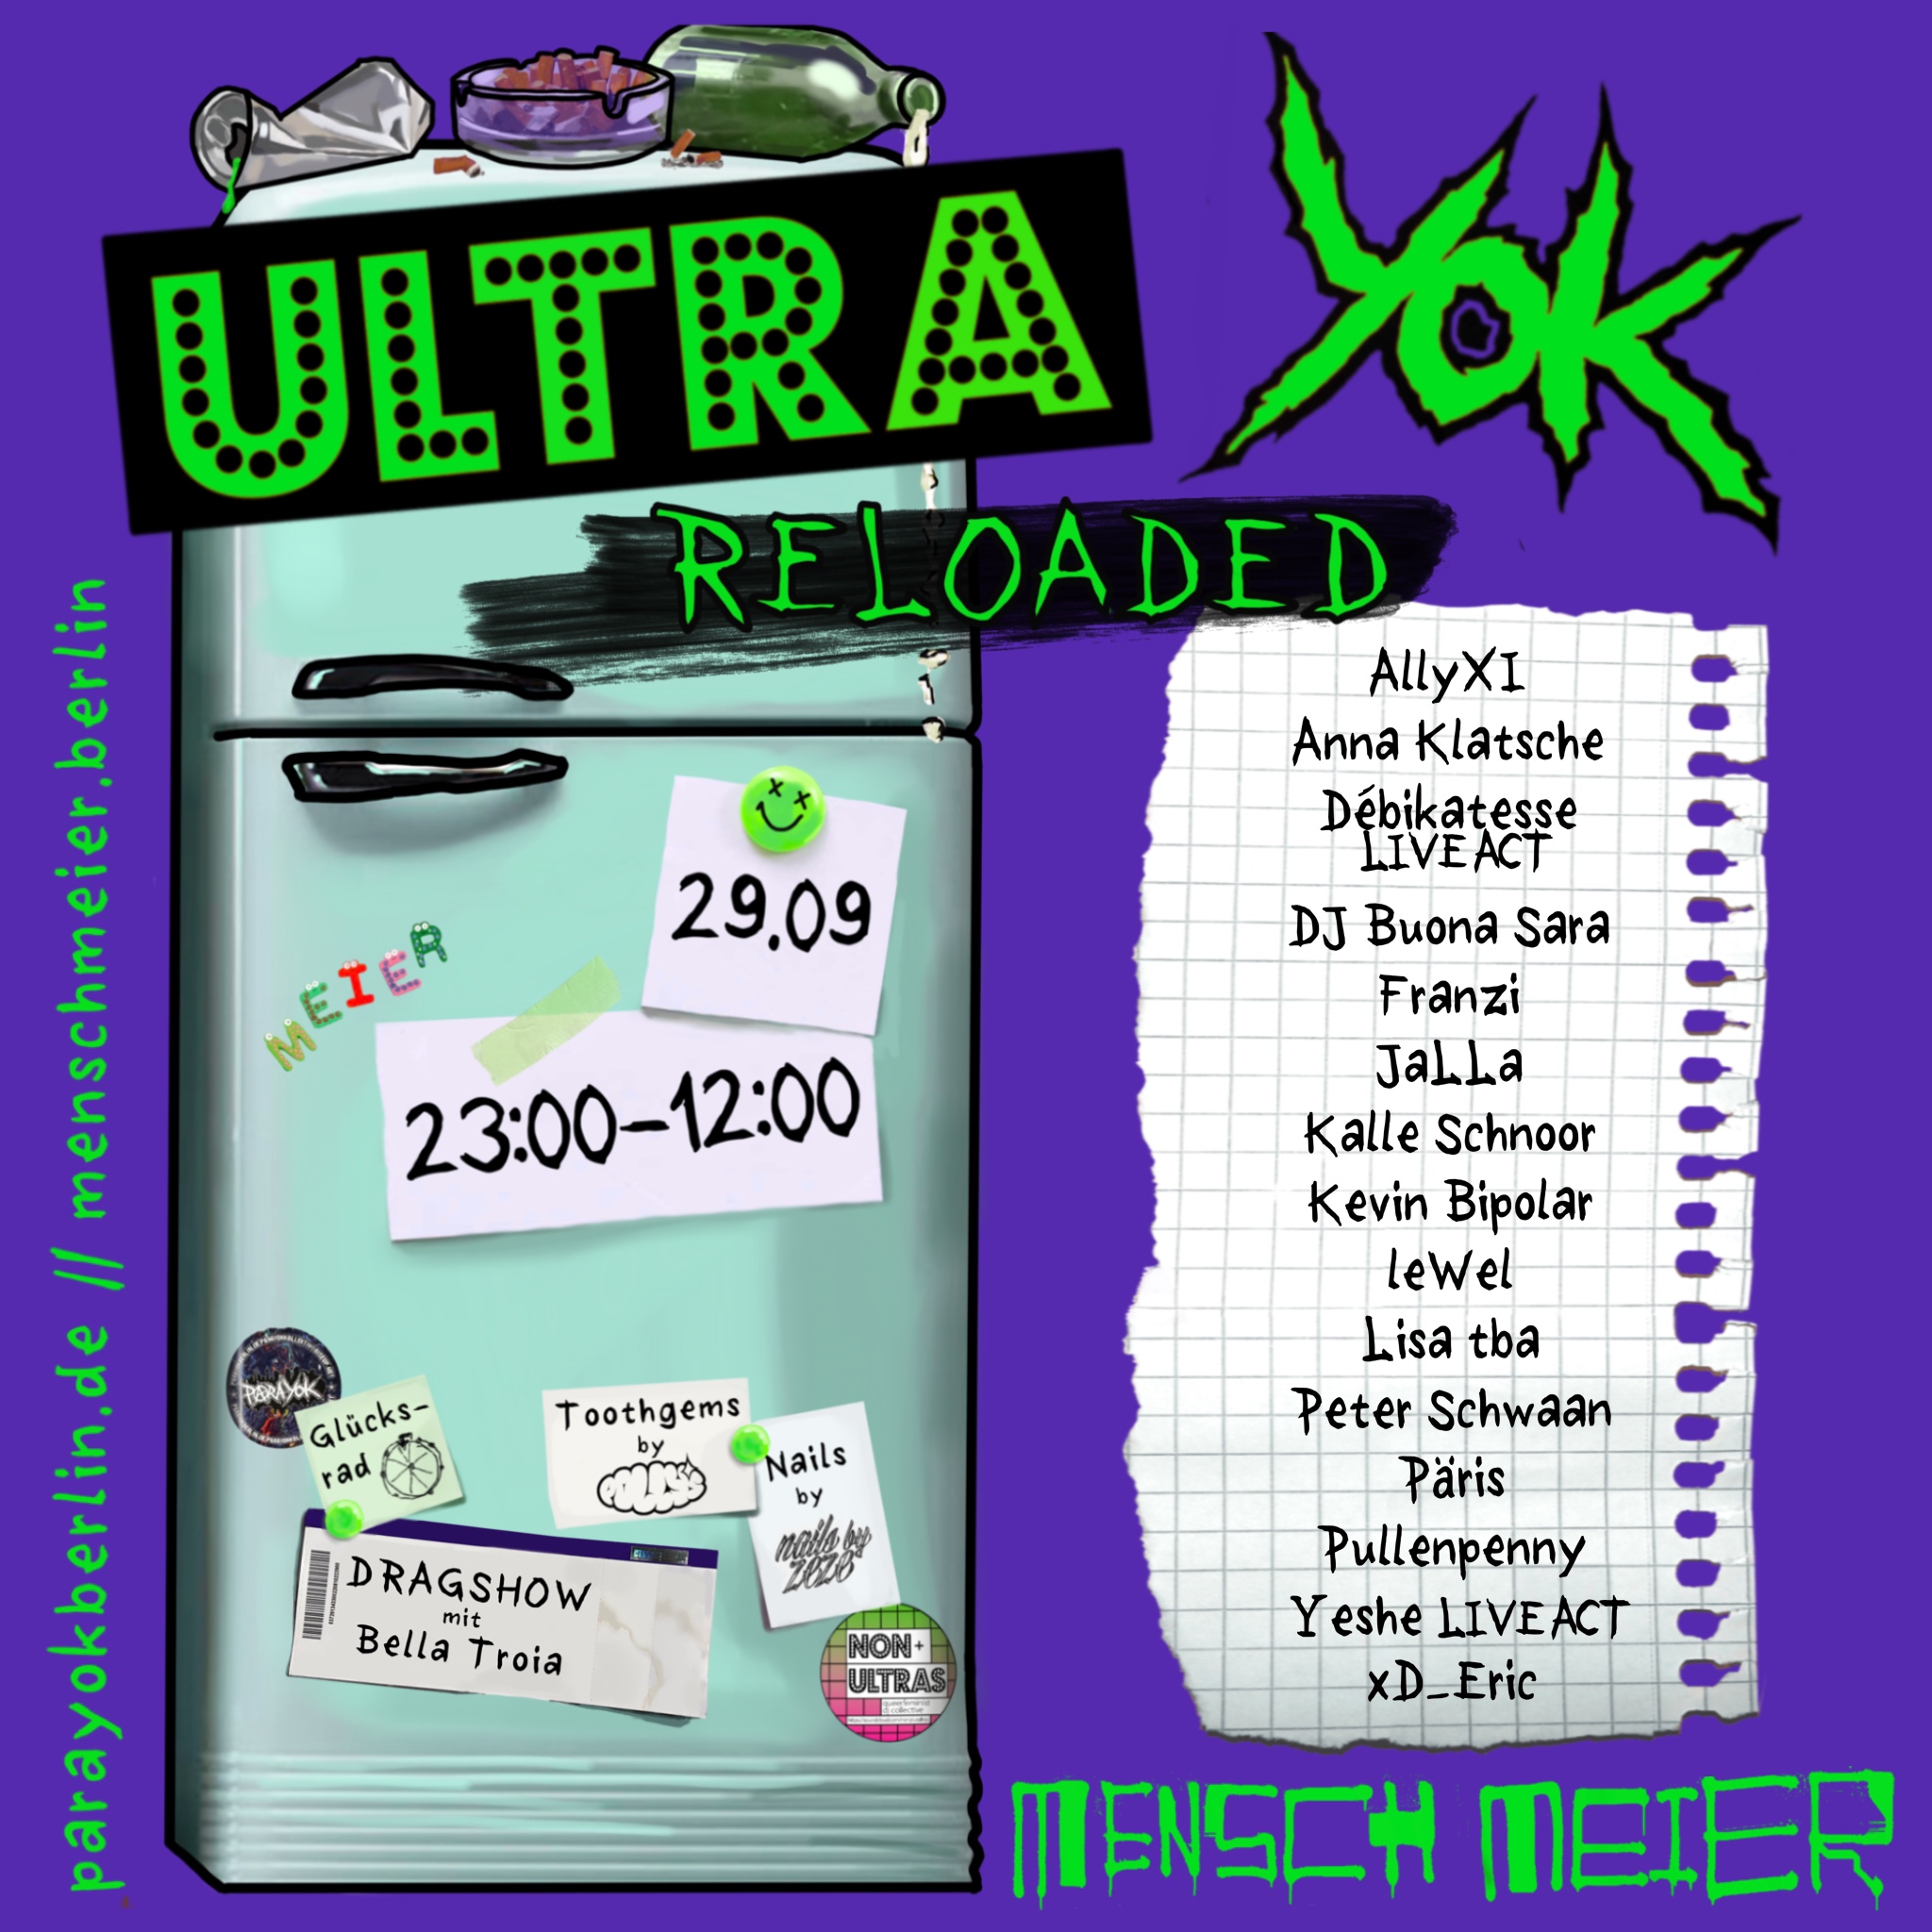 Ultra Yok Reloaded // 29.09.